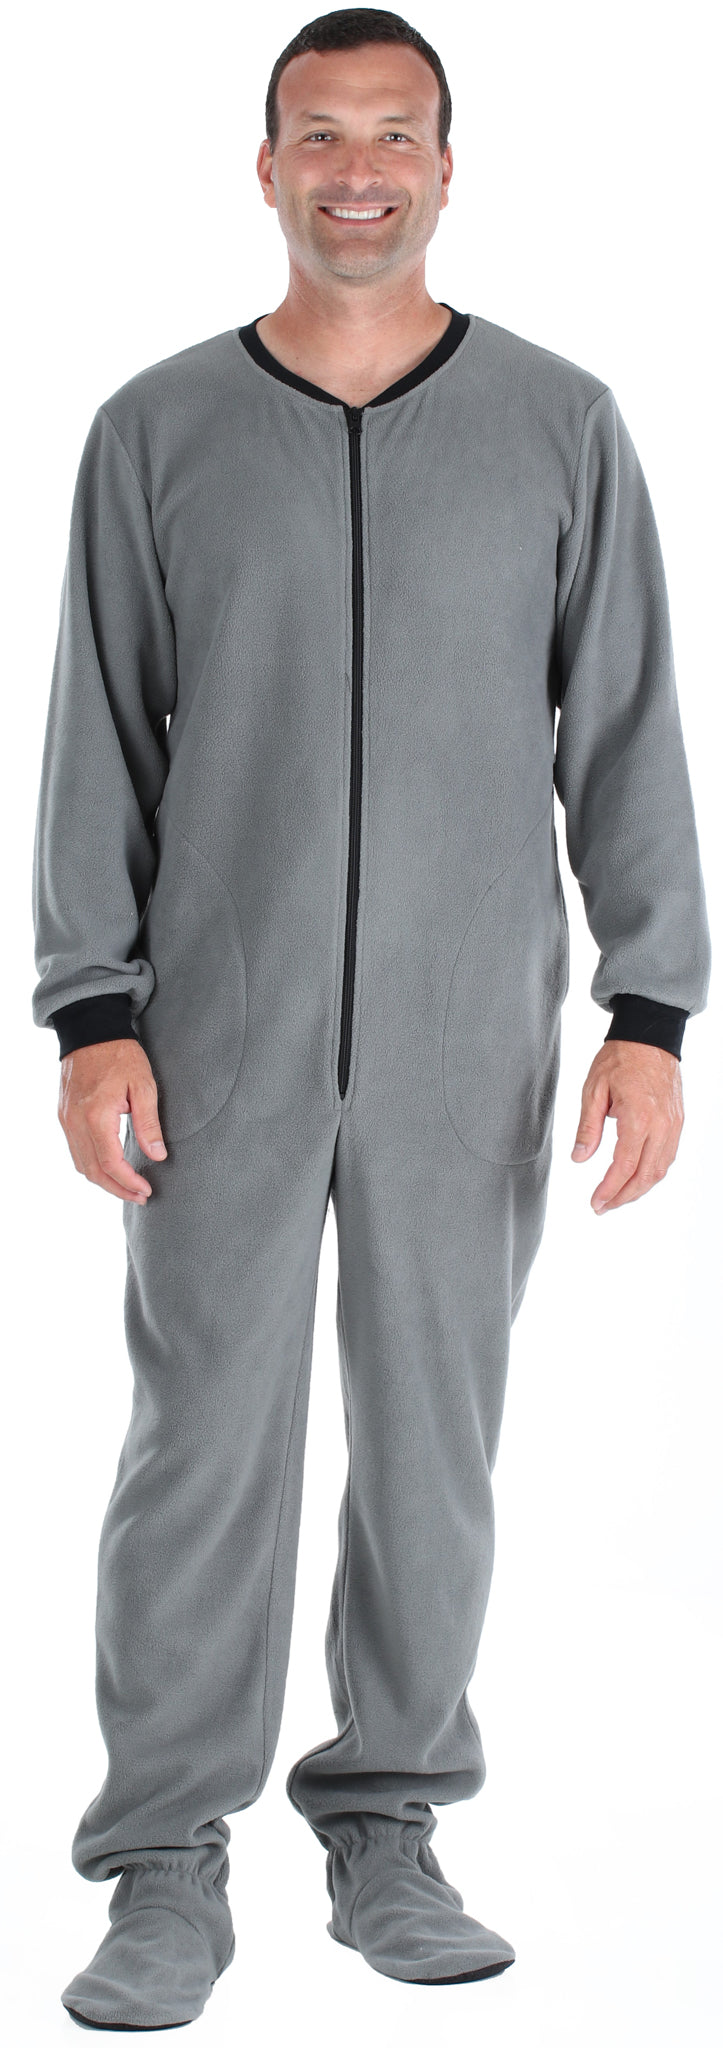 PajamaMania Men’s Fleece Footed Solid Color Onesie Pajamas Jumpsuit